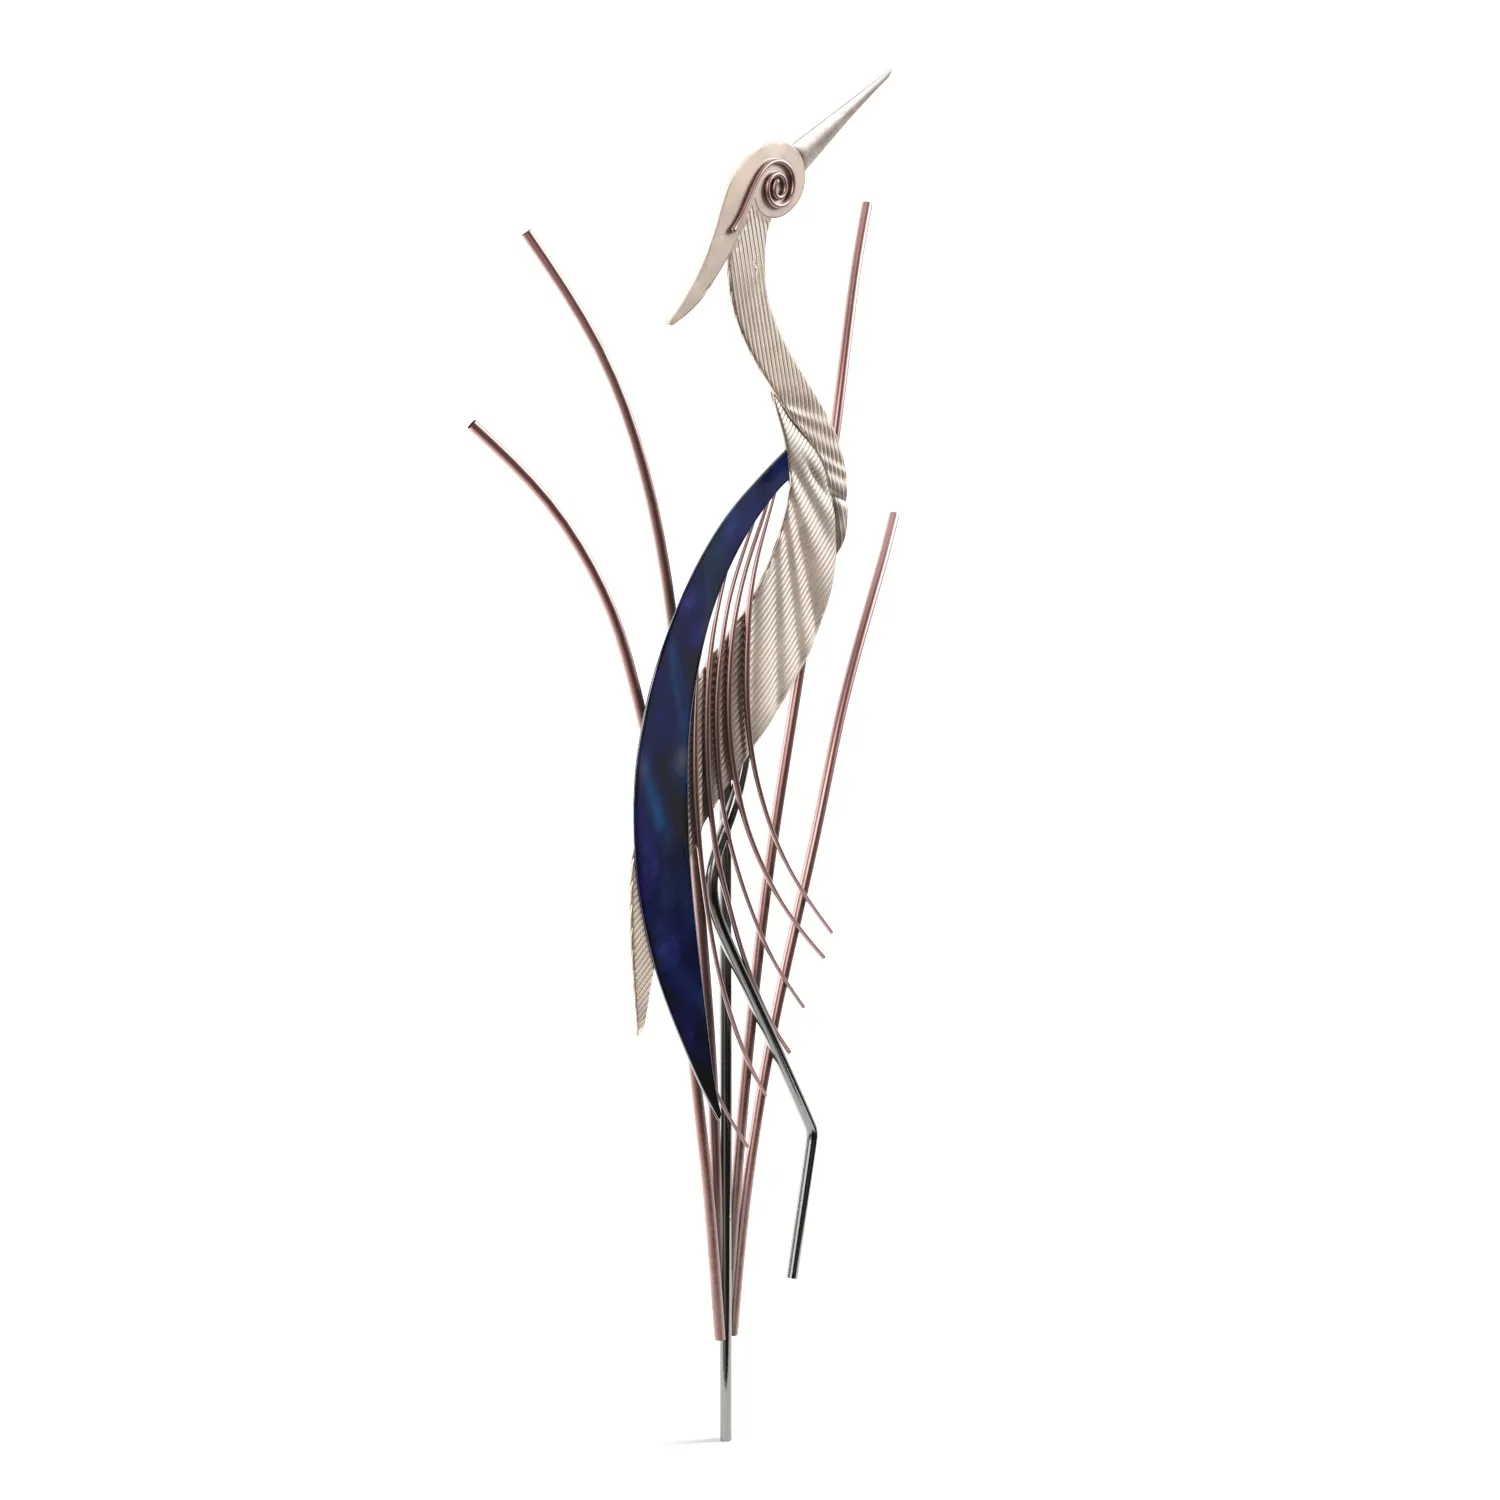 Heron Bird With Head Raised 38 Inch High Metal Wall Art PBR 3D Model_03